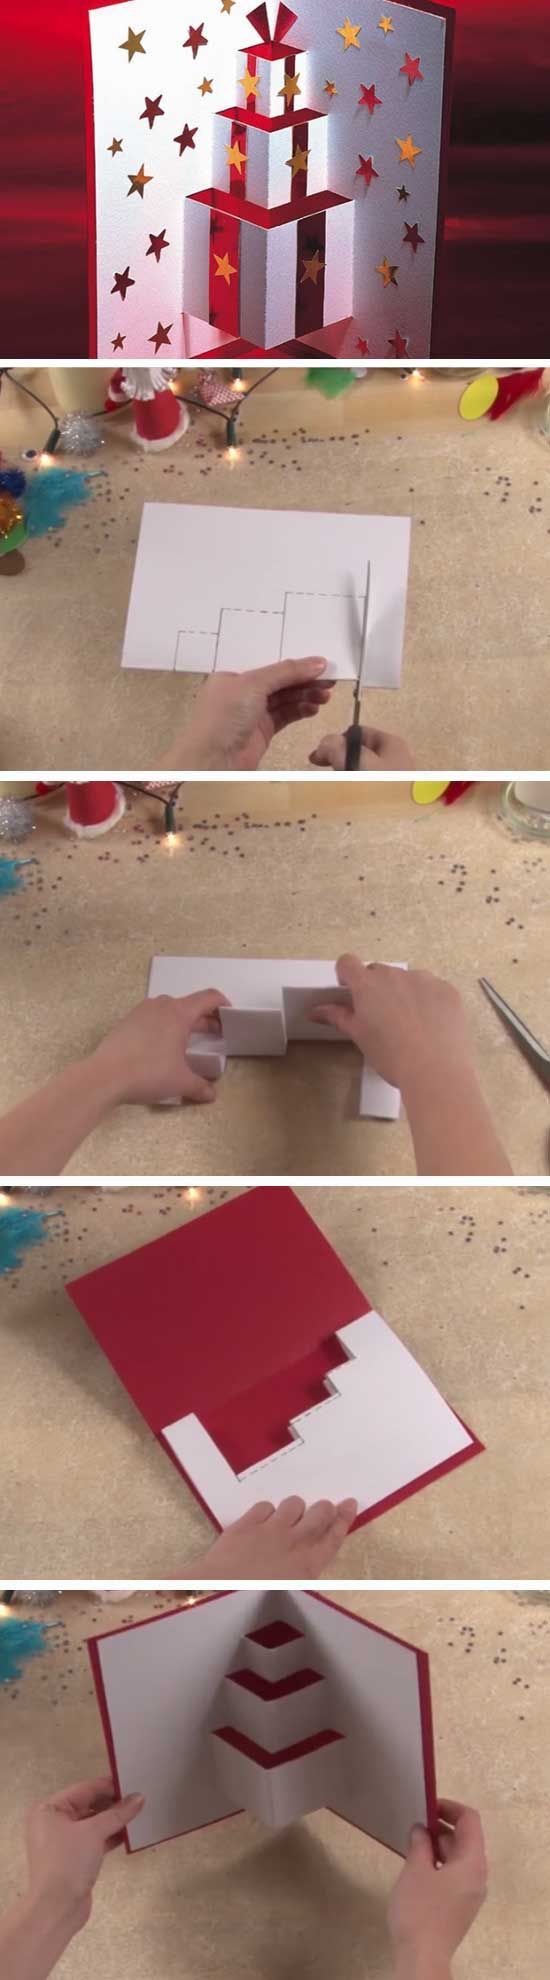 Pop-up Present | 20 + DIY Christmas Cards for Kids to Make